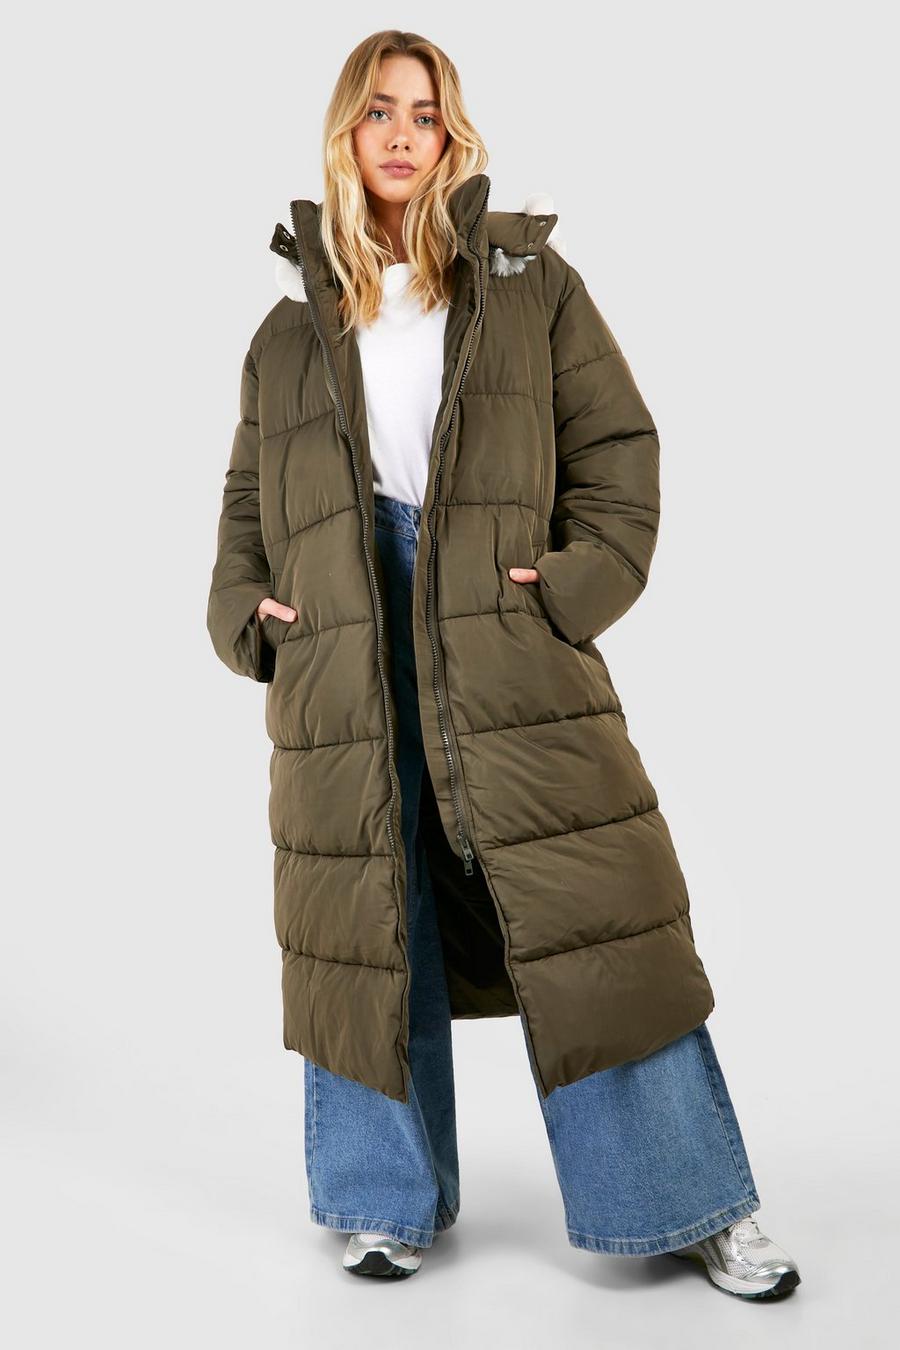 Hengshikeji Women’s Winter Cotton Coat Parka Jacket Long Puffer Outerwear Slim Overwear with Faux Fur Hood 